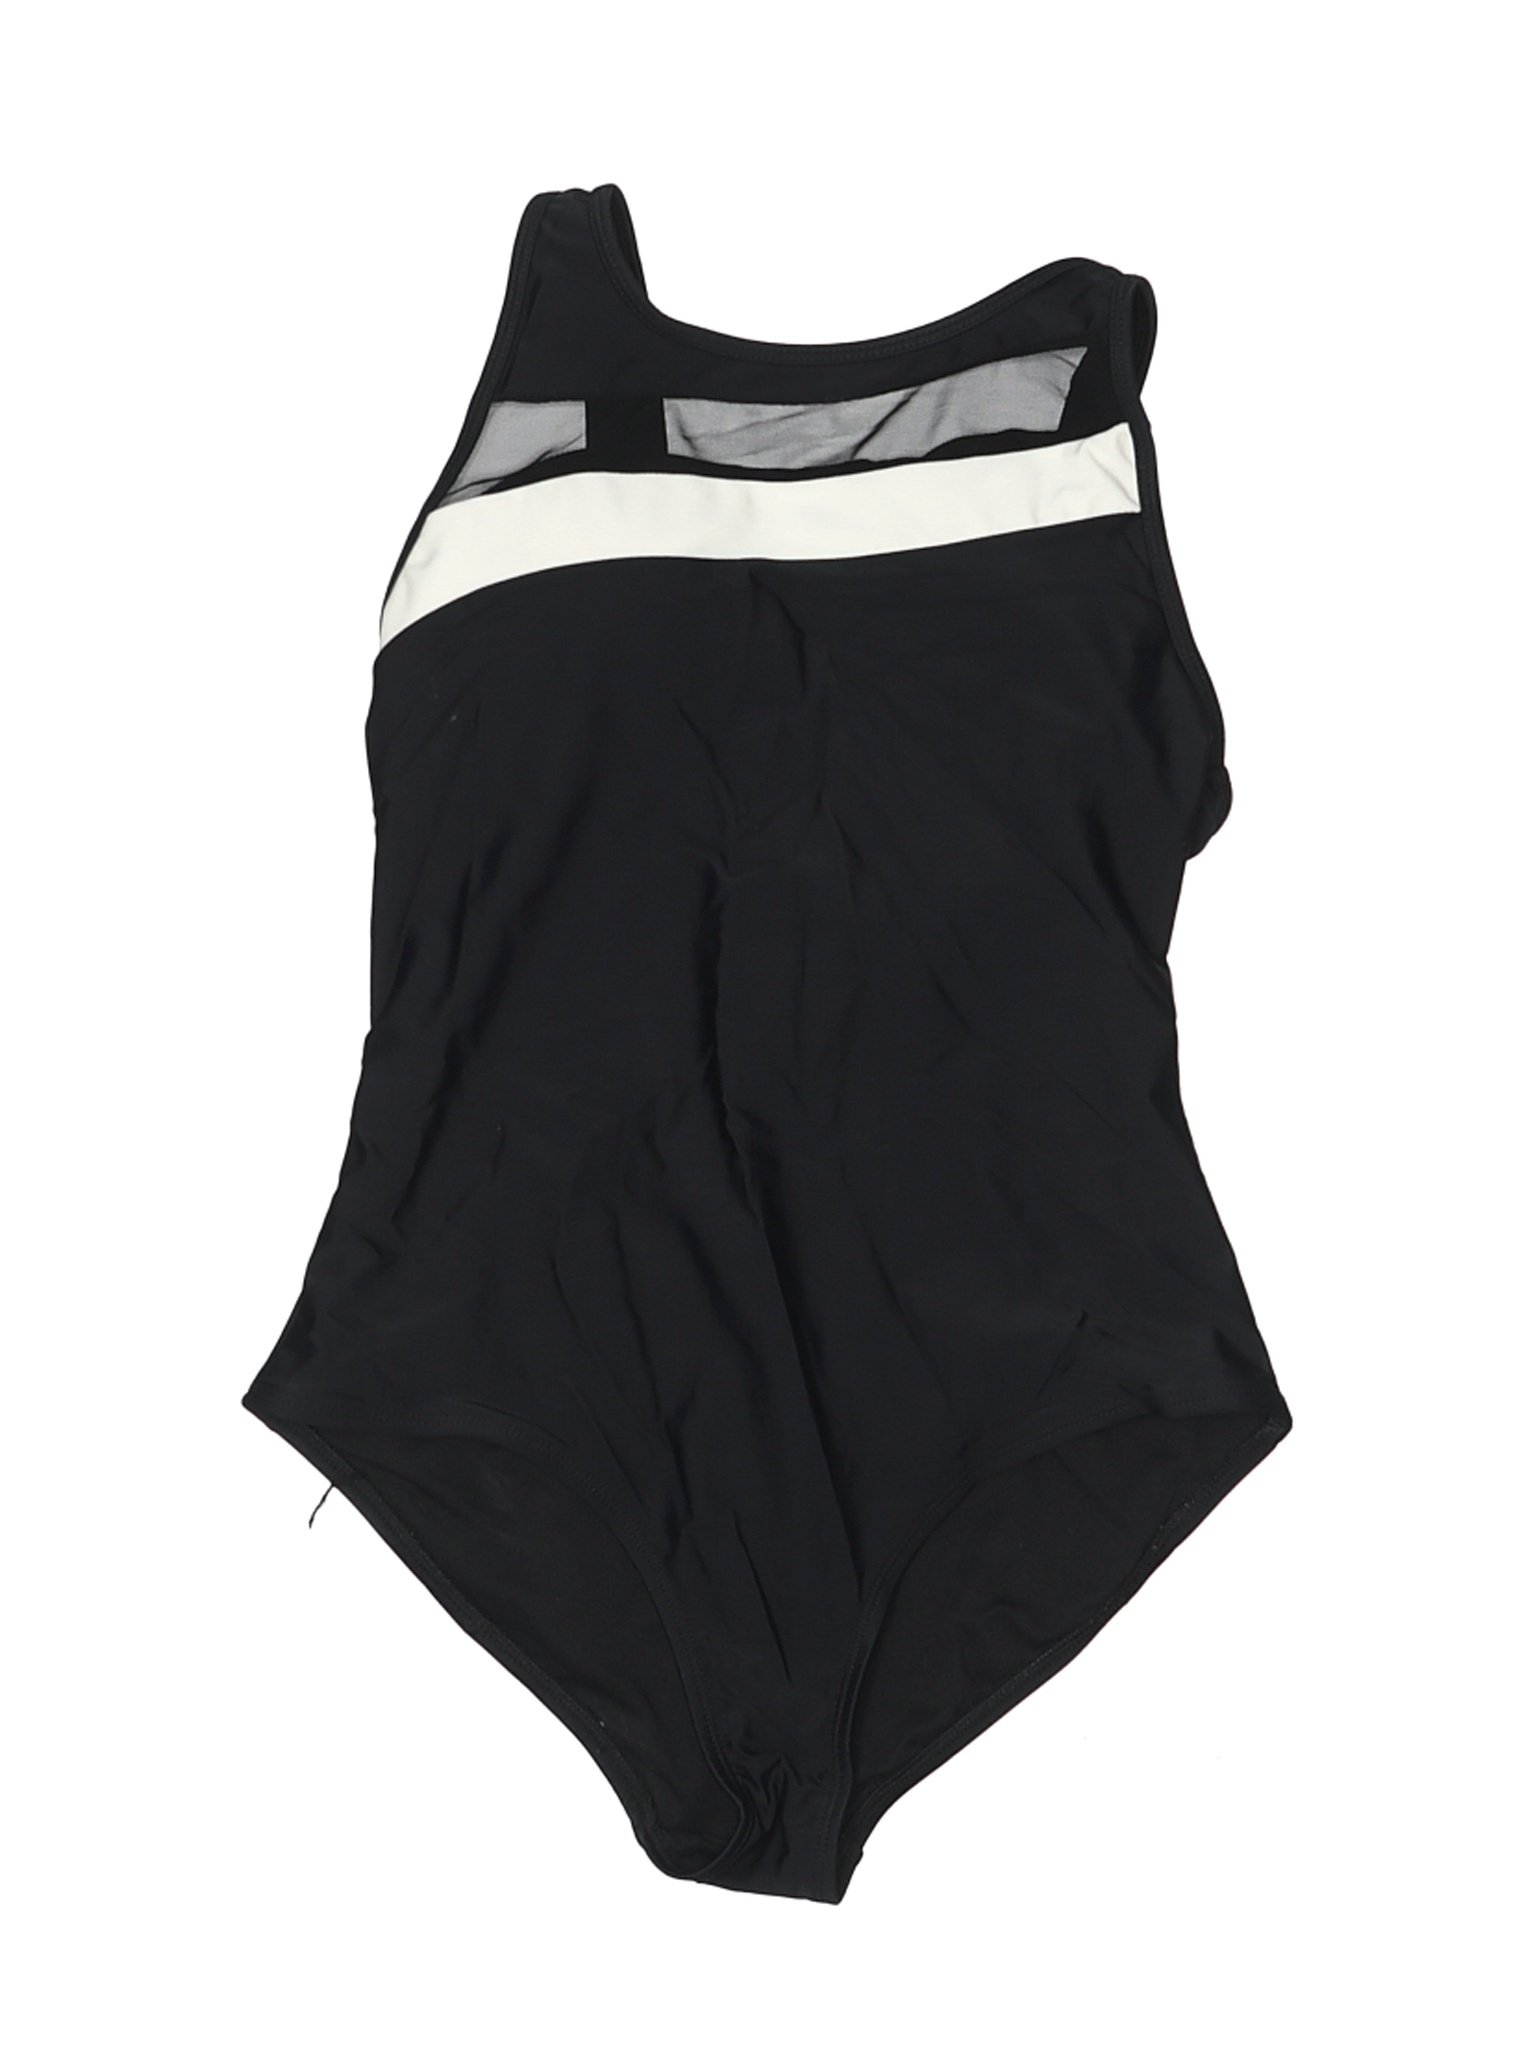 Catalina Women Black One Piece Swimsuit S | eBay